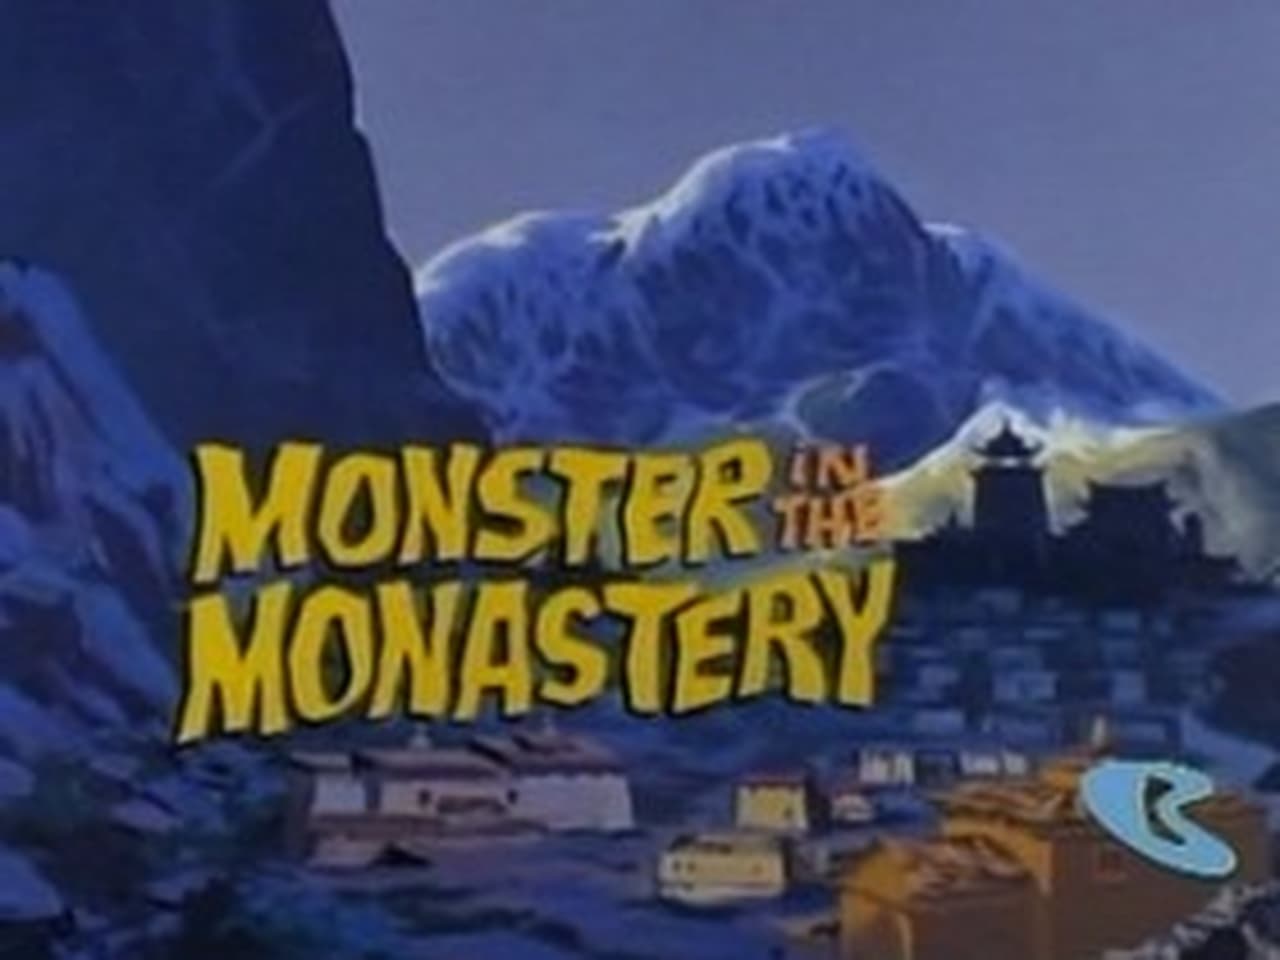 Monster in the Monastery